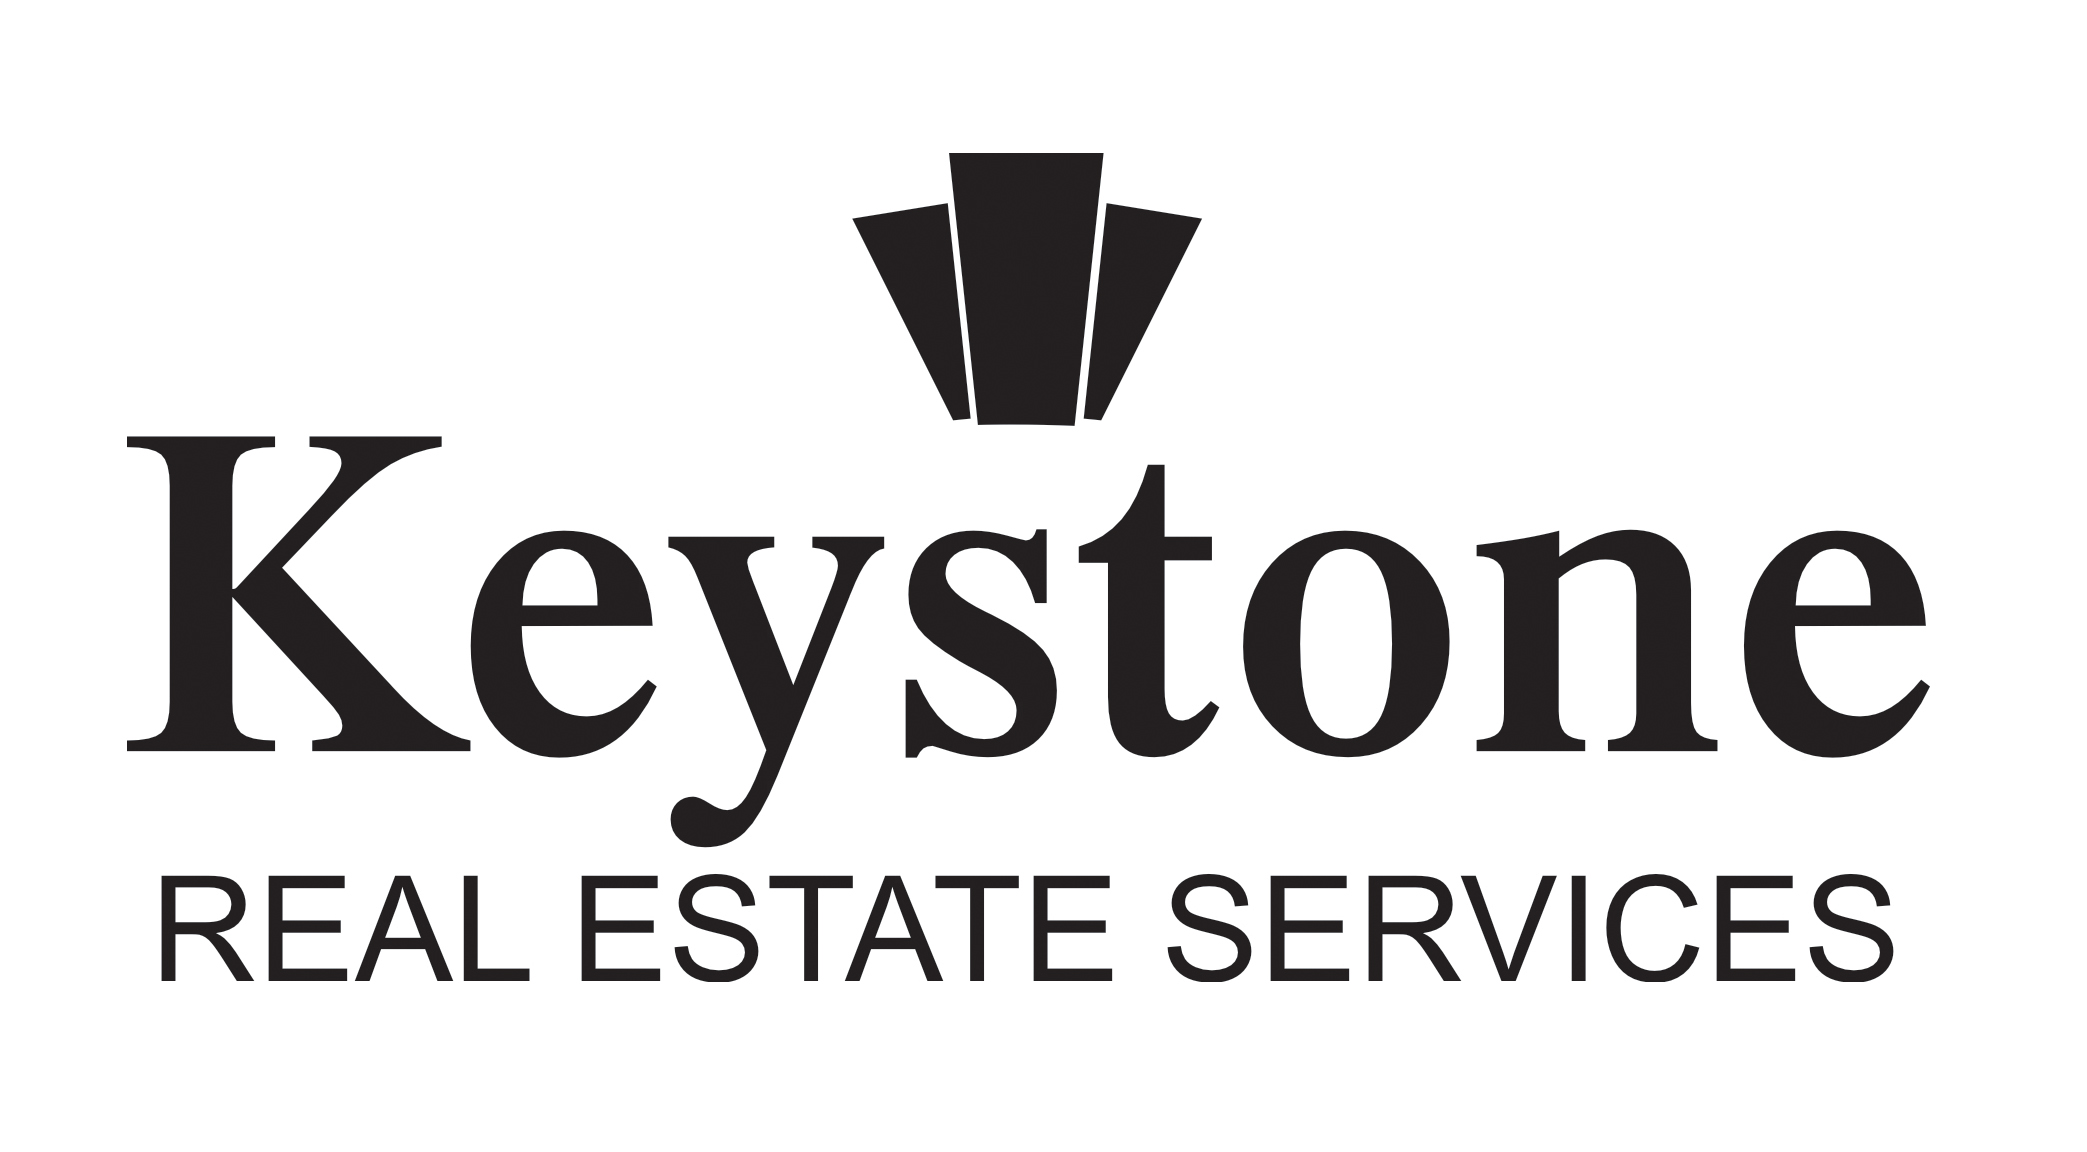 Keystone Real Estate Services